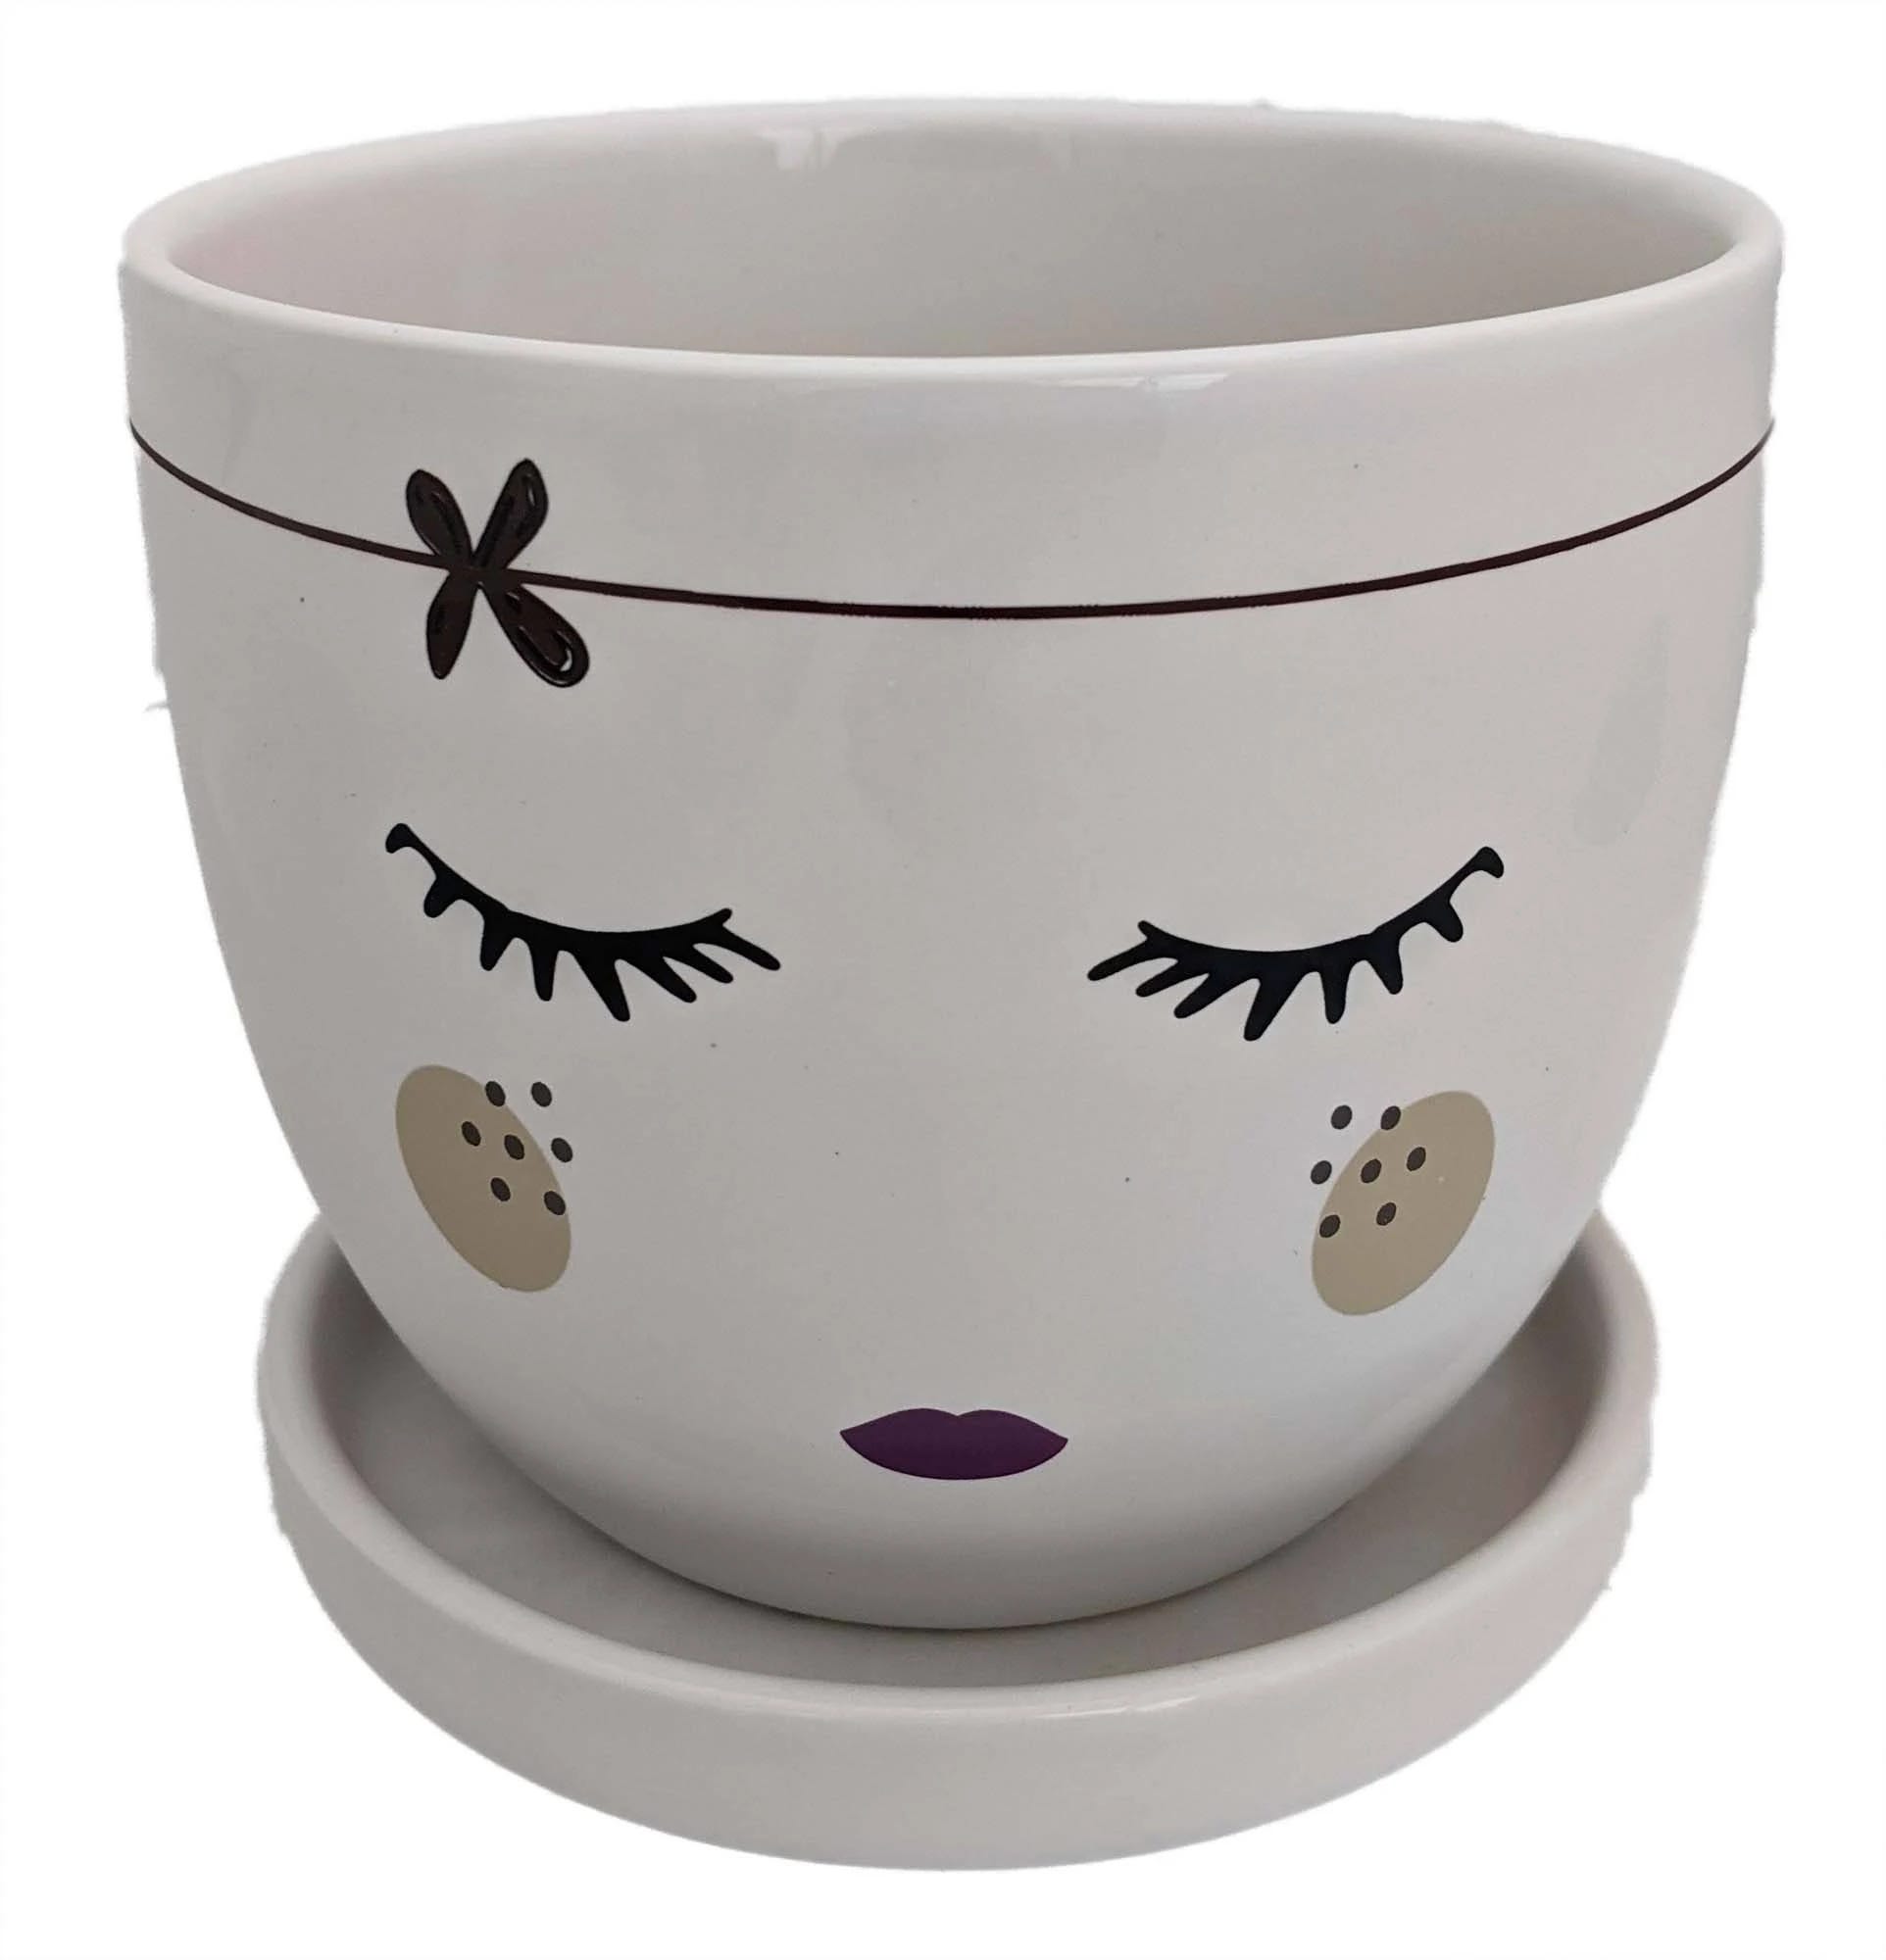 Vintage-Inspired Freckled Face Plant Pot with Saucer | Image